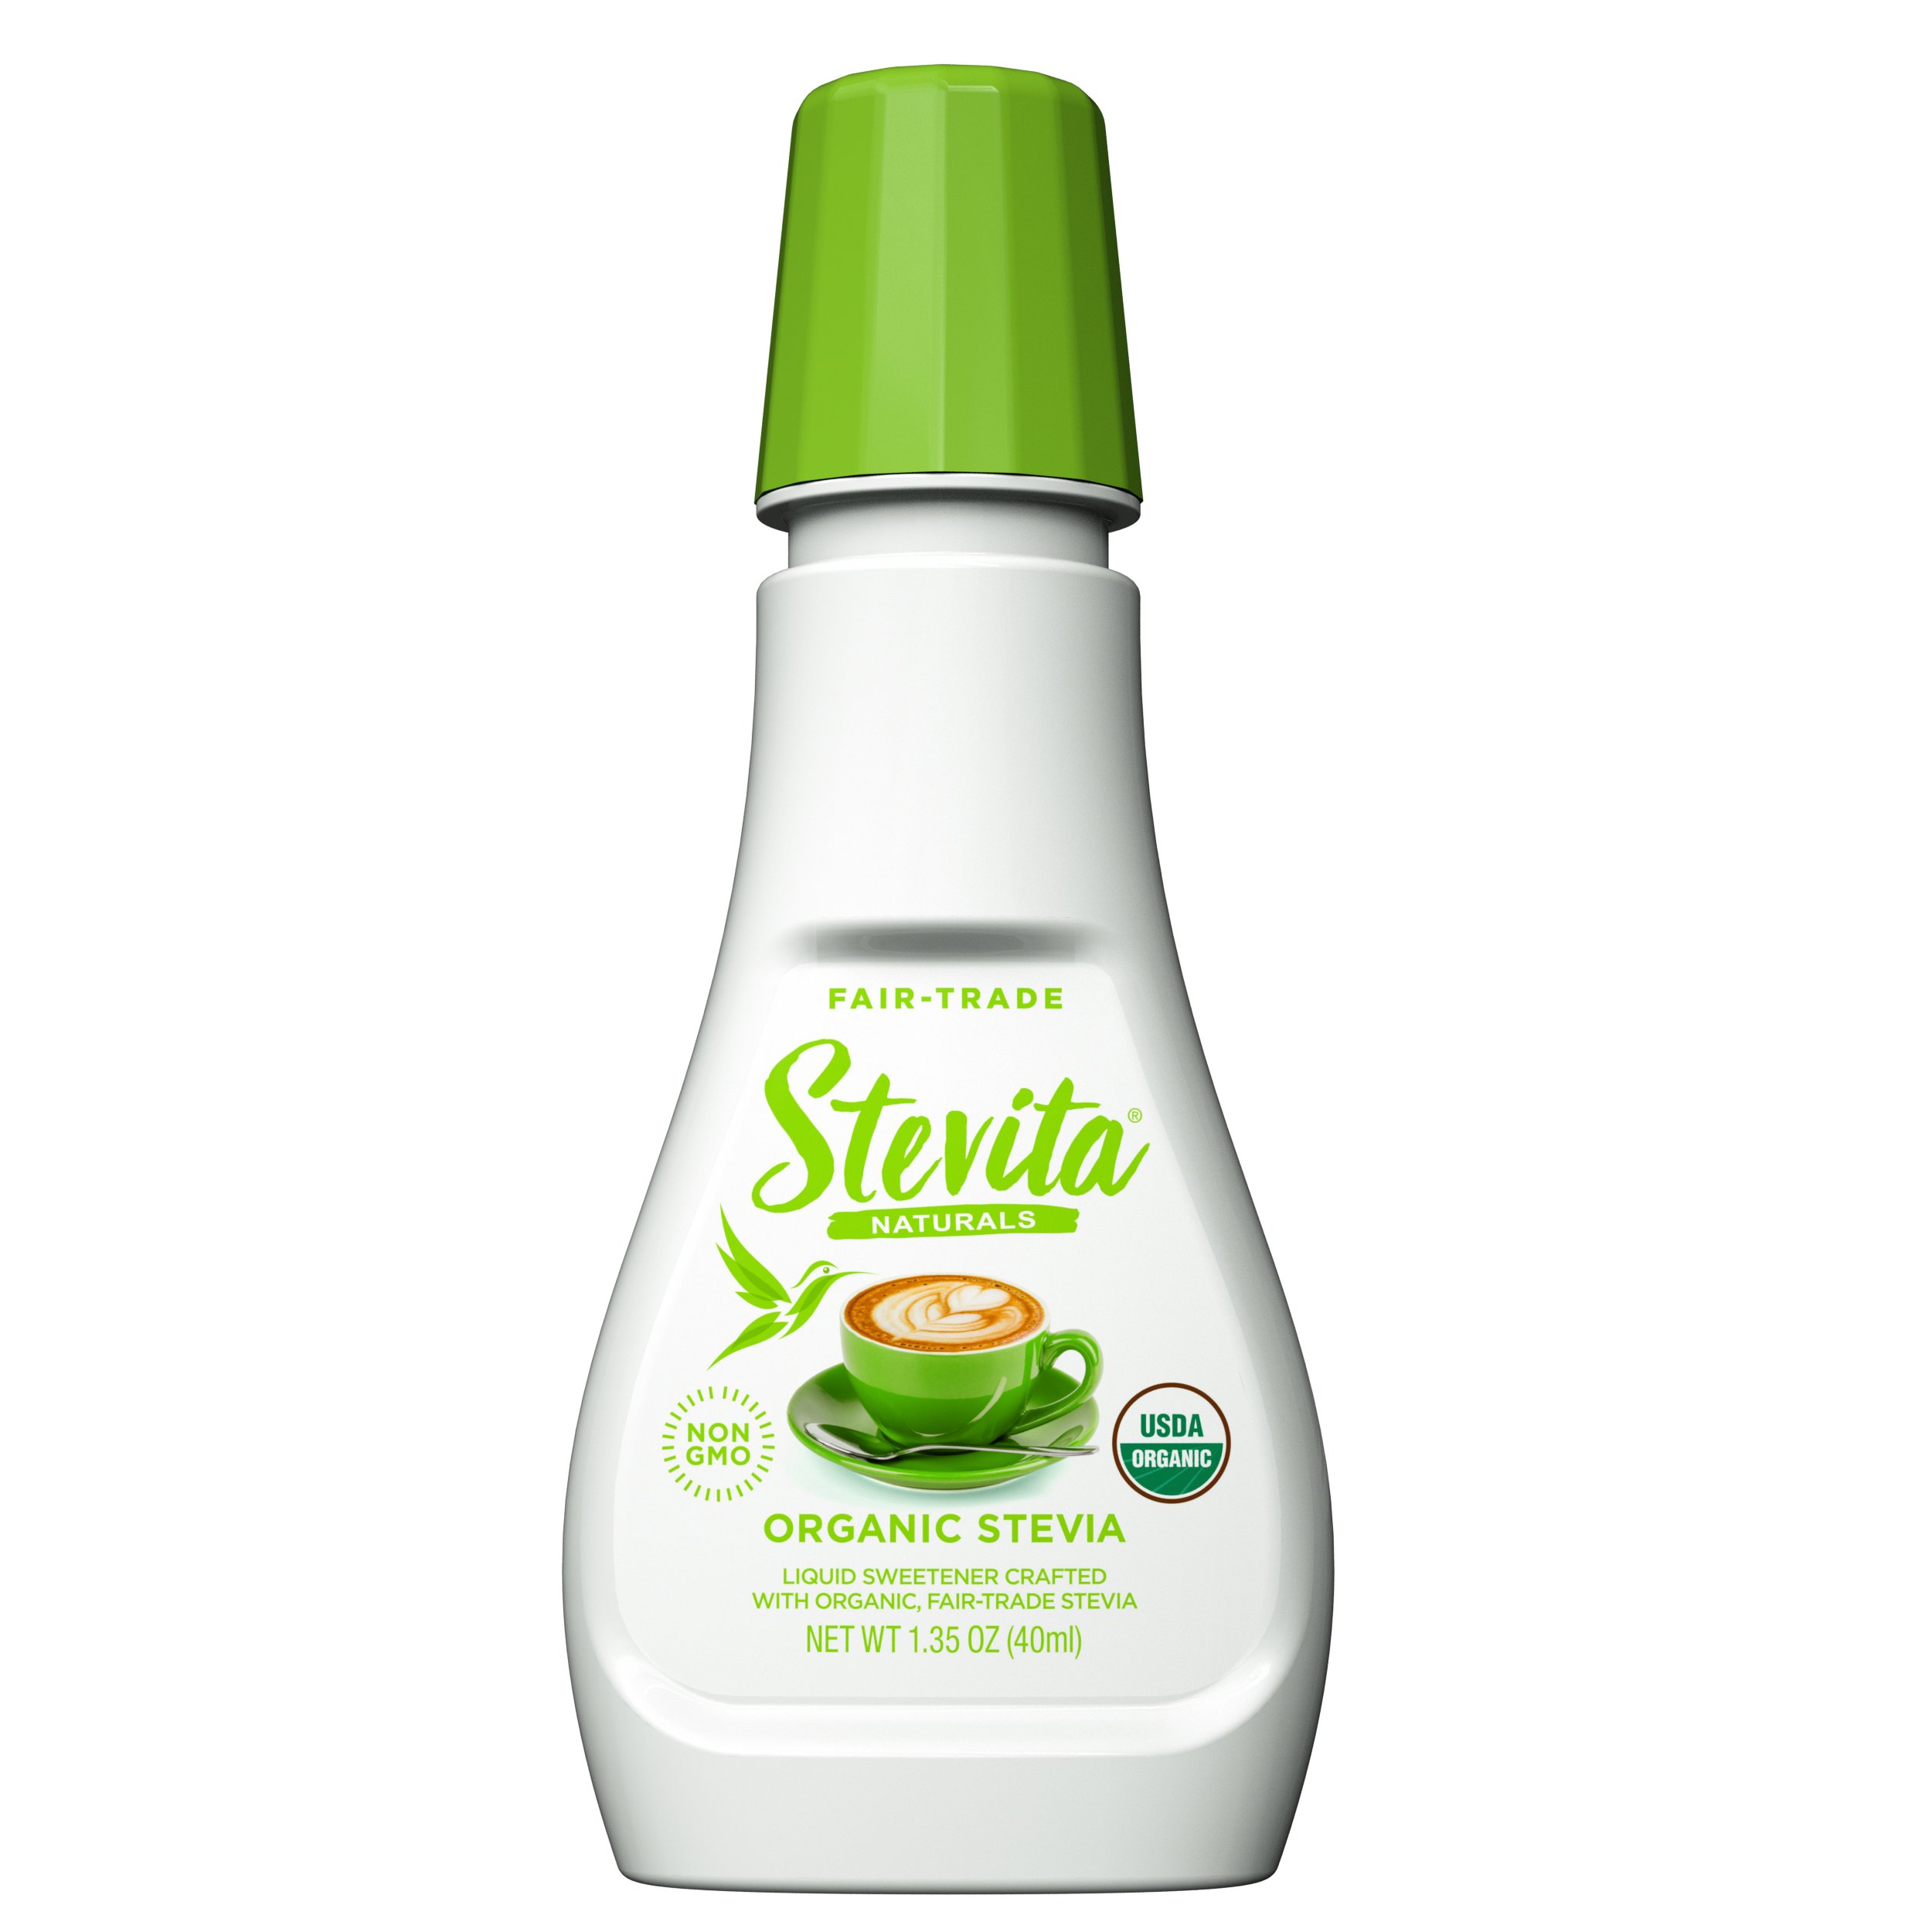 H-E-B Stevia Extract Packets - Shop Sugar Substitutes at H-E-B